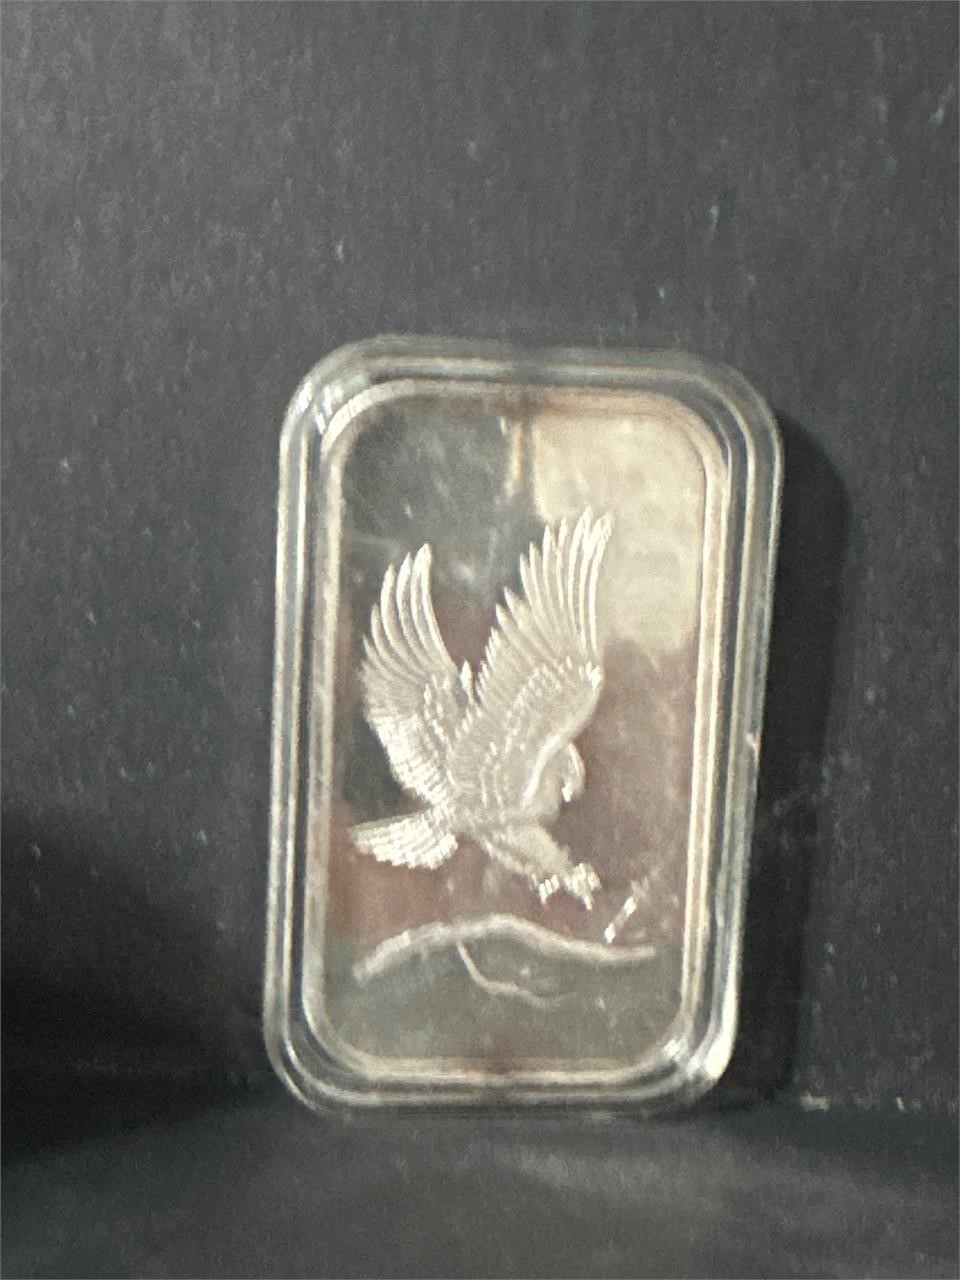 Rare 1 oz silver bullion bars